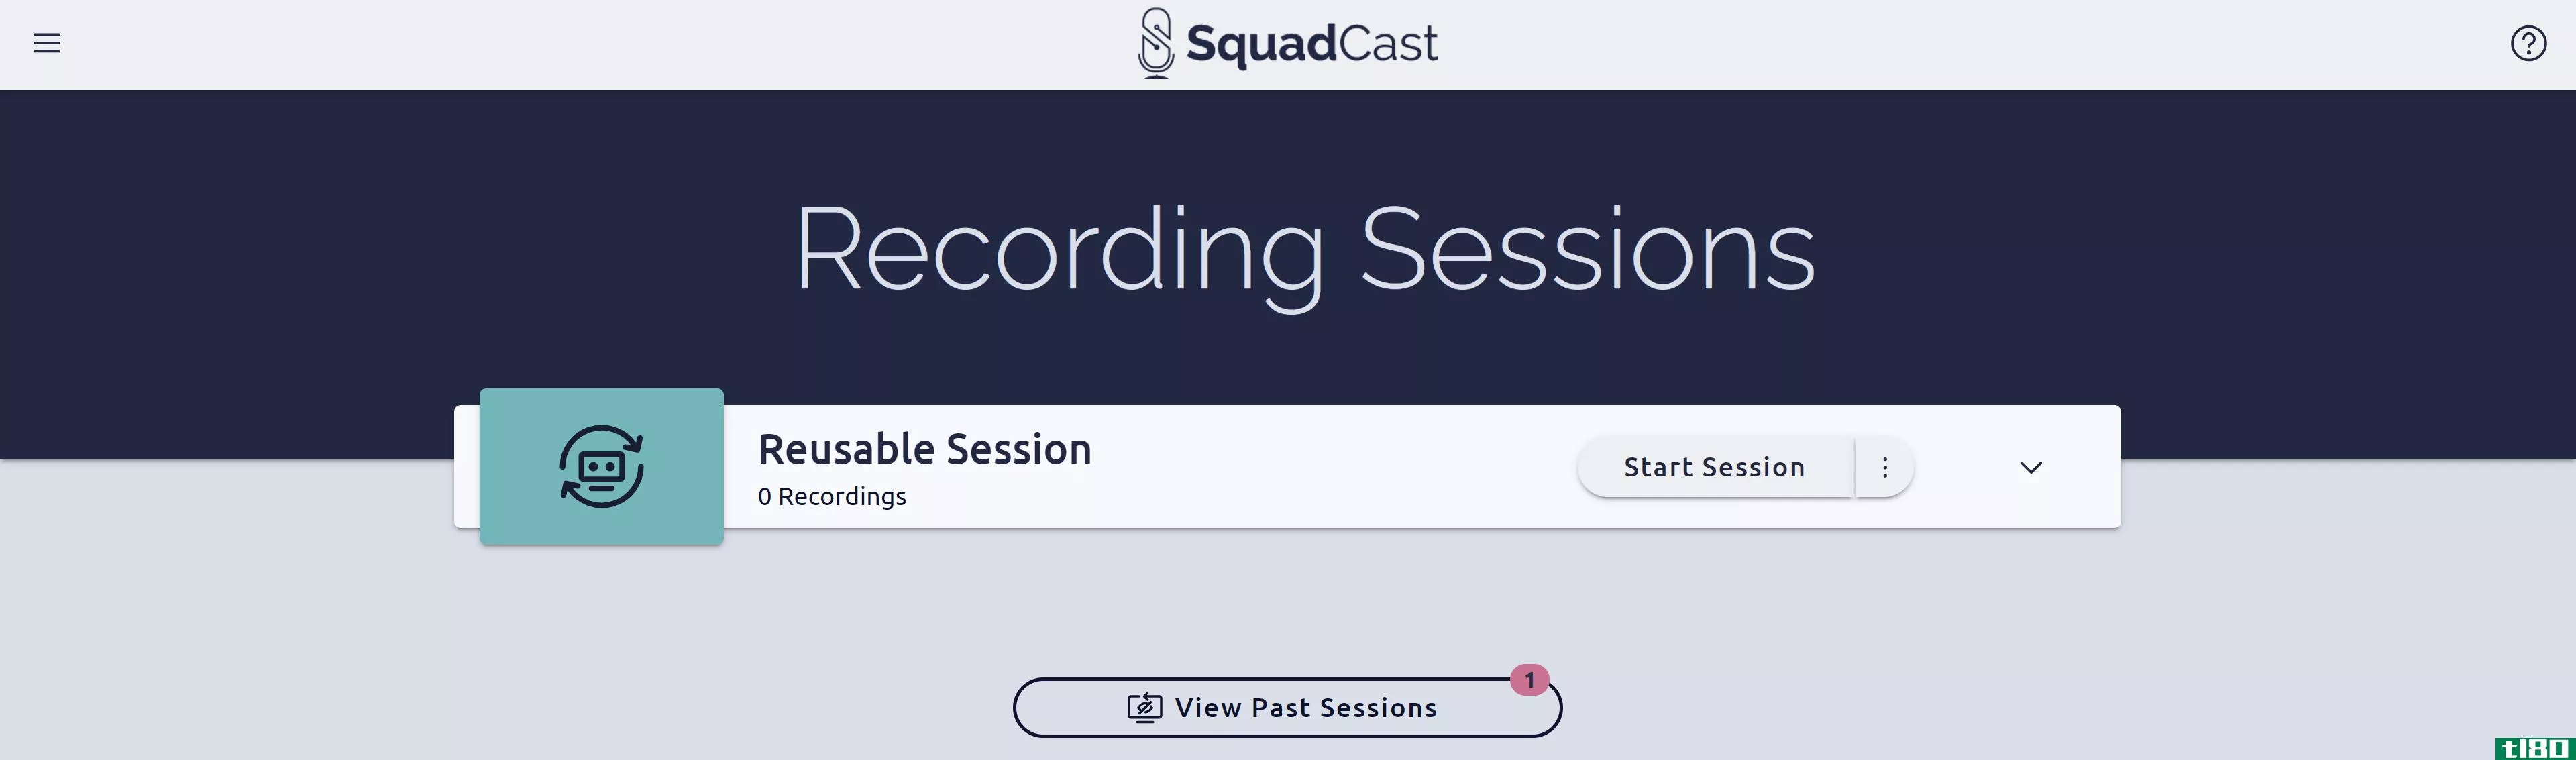 Squadcast Recording Sessi*** Main Page